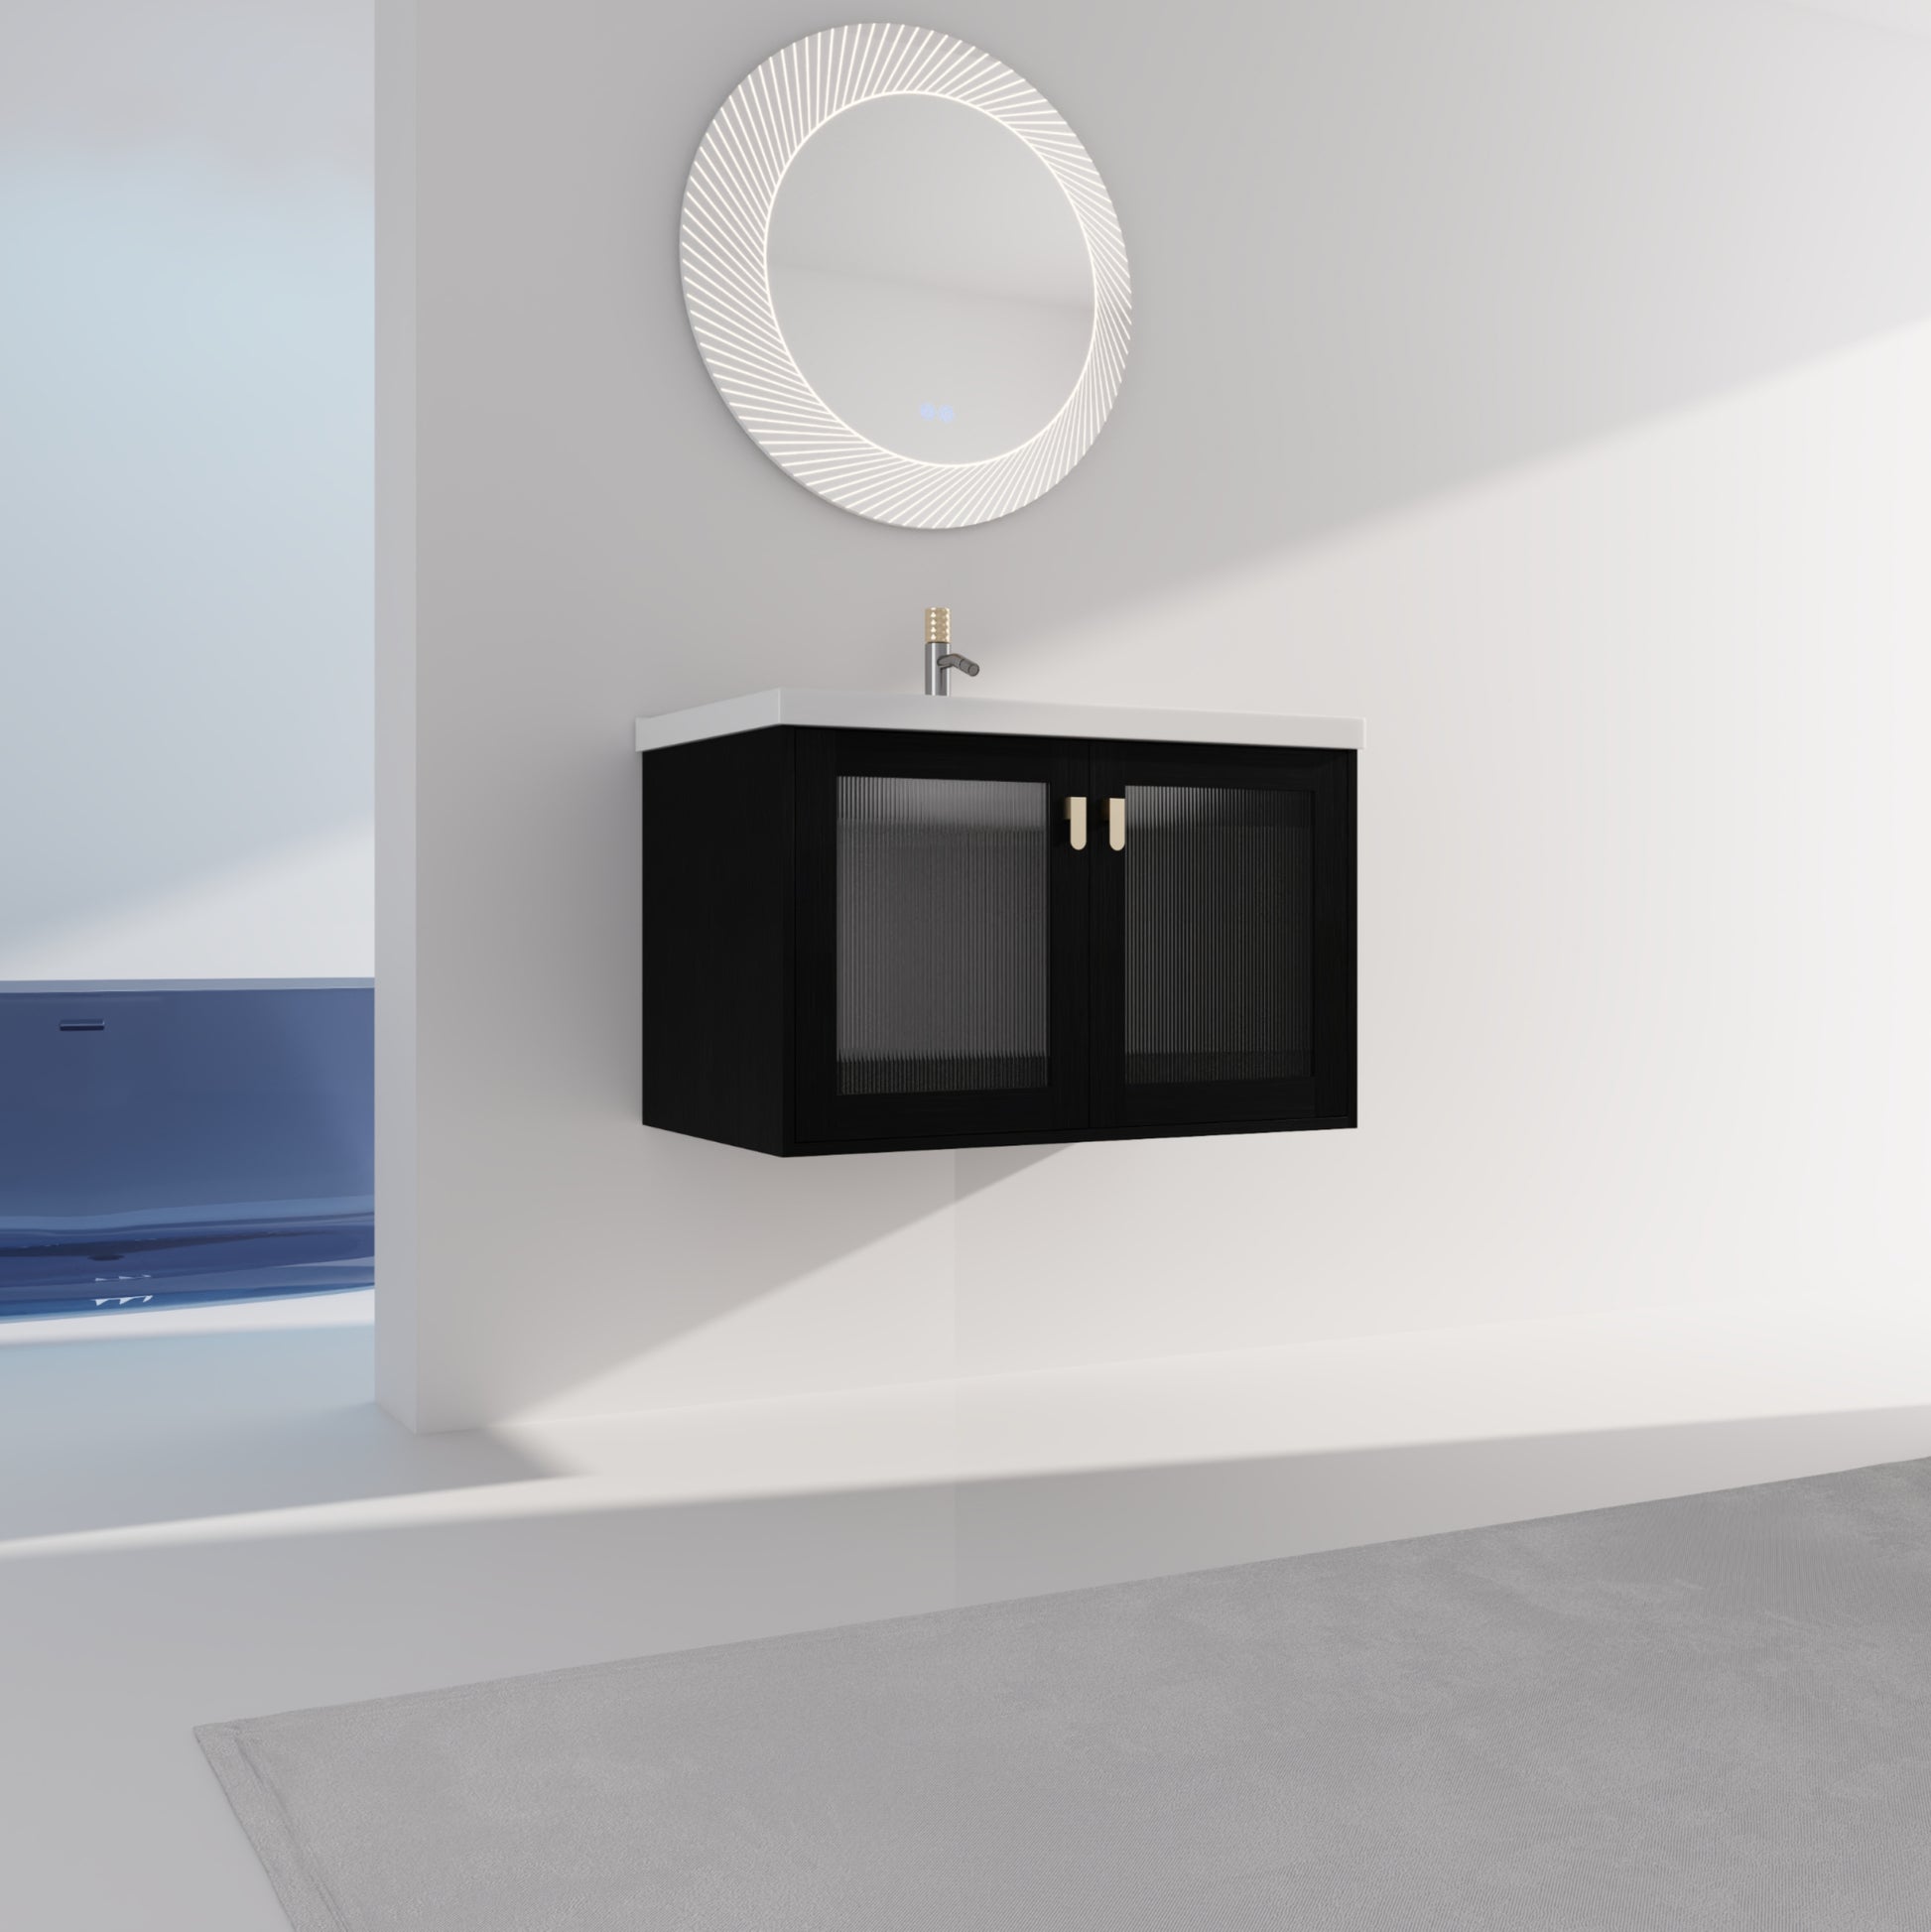 32 Inch Wall Mounted Bathroom Vanity With Sink, For black-2-bathroom-wall mounted-modern-plywood